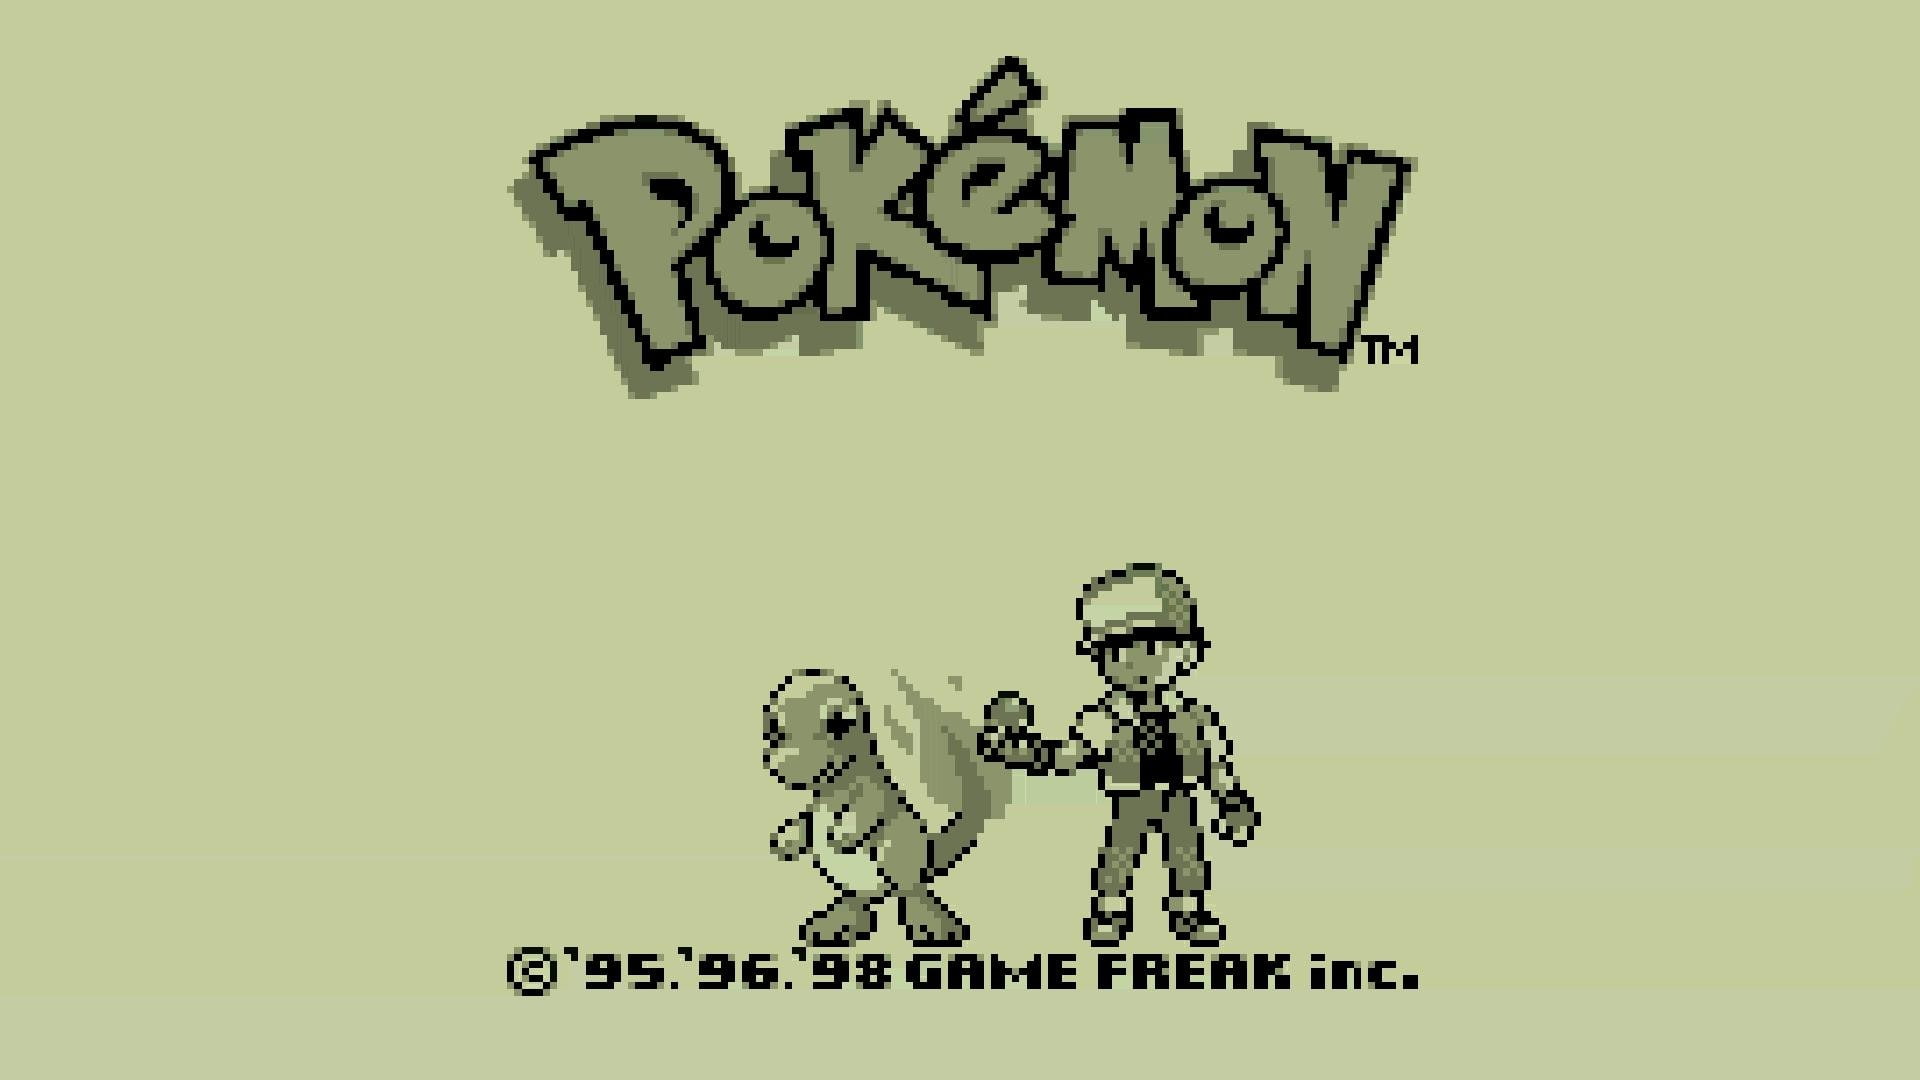 Pokémon, retro games, video games, communication, text, creativity